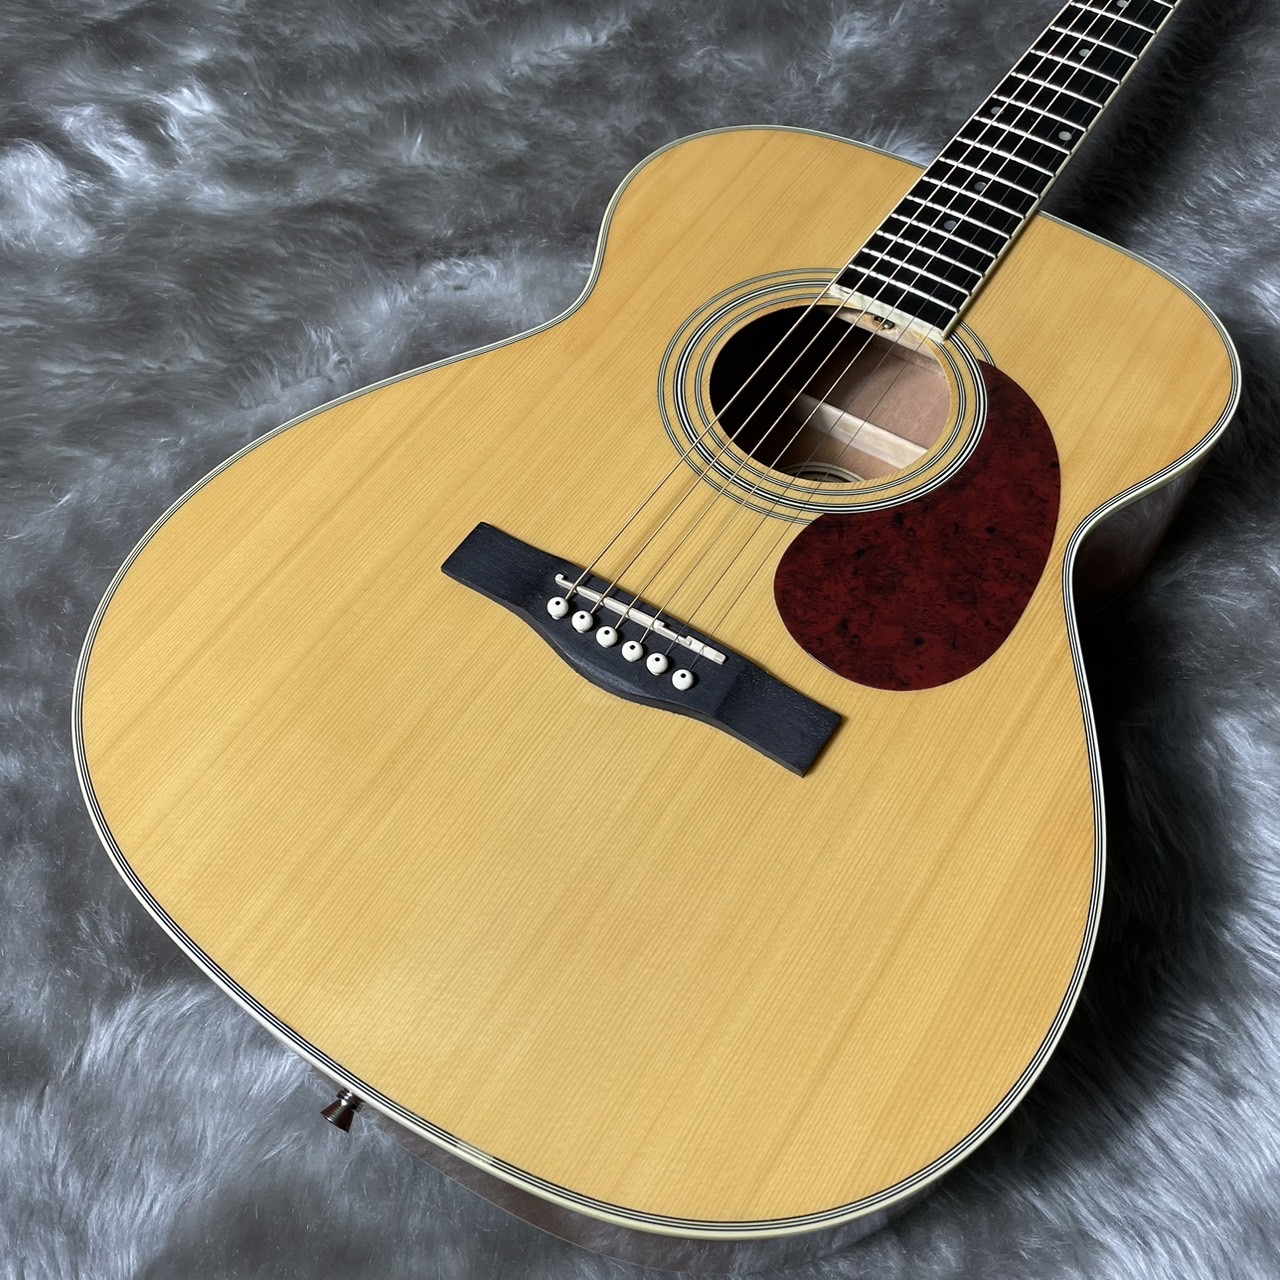 Lumber LF3NA アコースティックギター - アコースティックギター